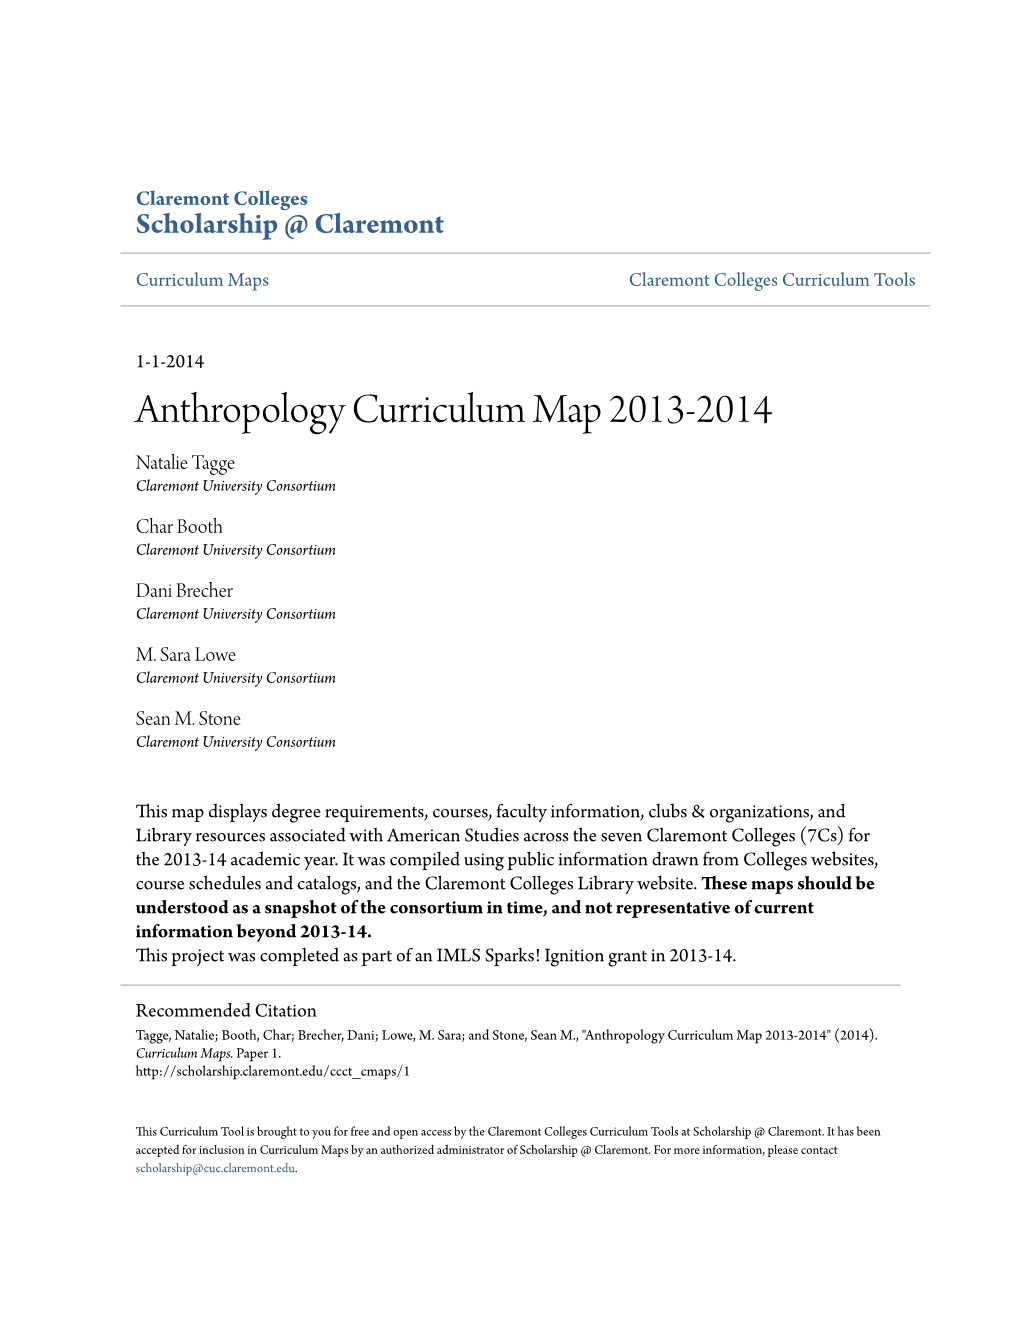 Anthropology Curriculum Map 2013-2014 Natalie Tagge Claremont University Consortium